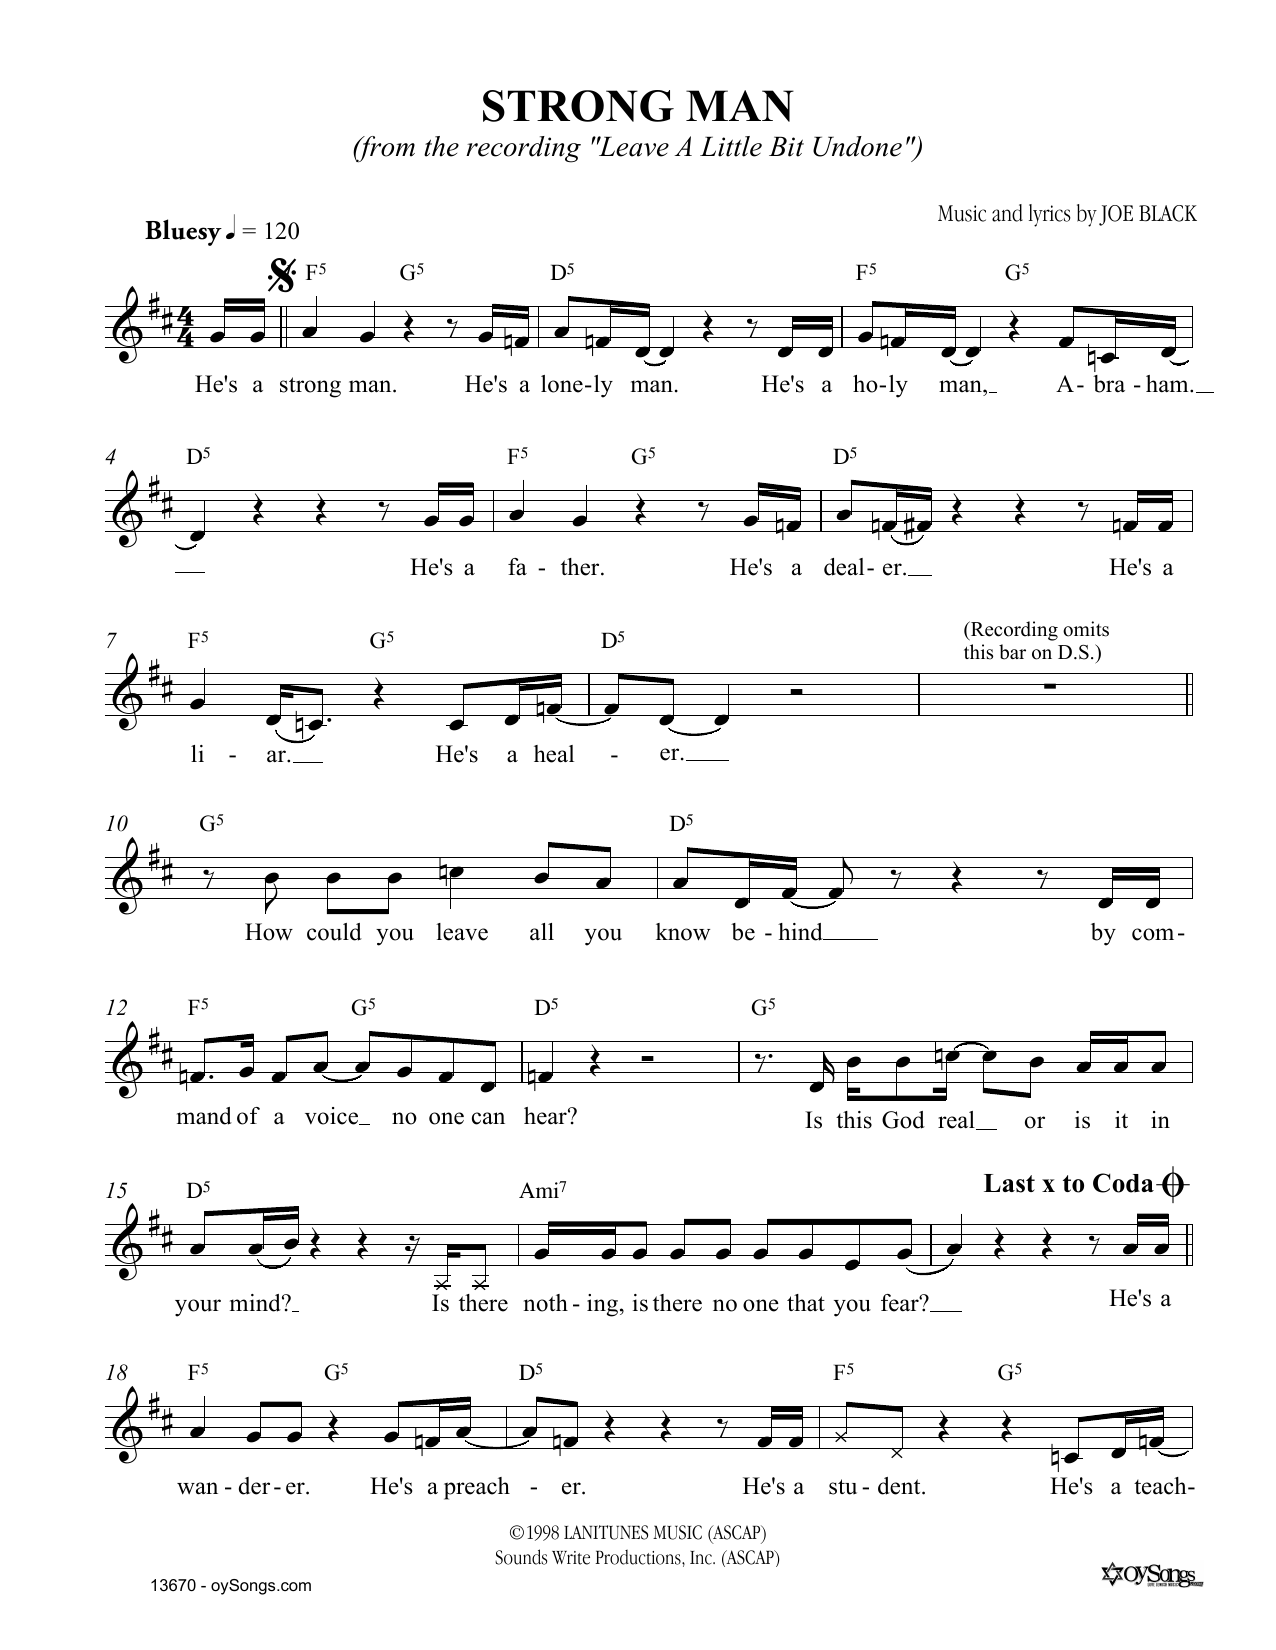 Joe Black Strong Man Sheet Music Notes & Chords for Melody Line, Lyrics & Chords - Download or Print PDF